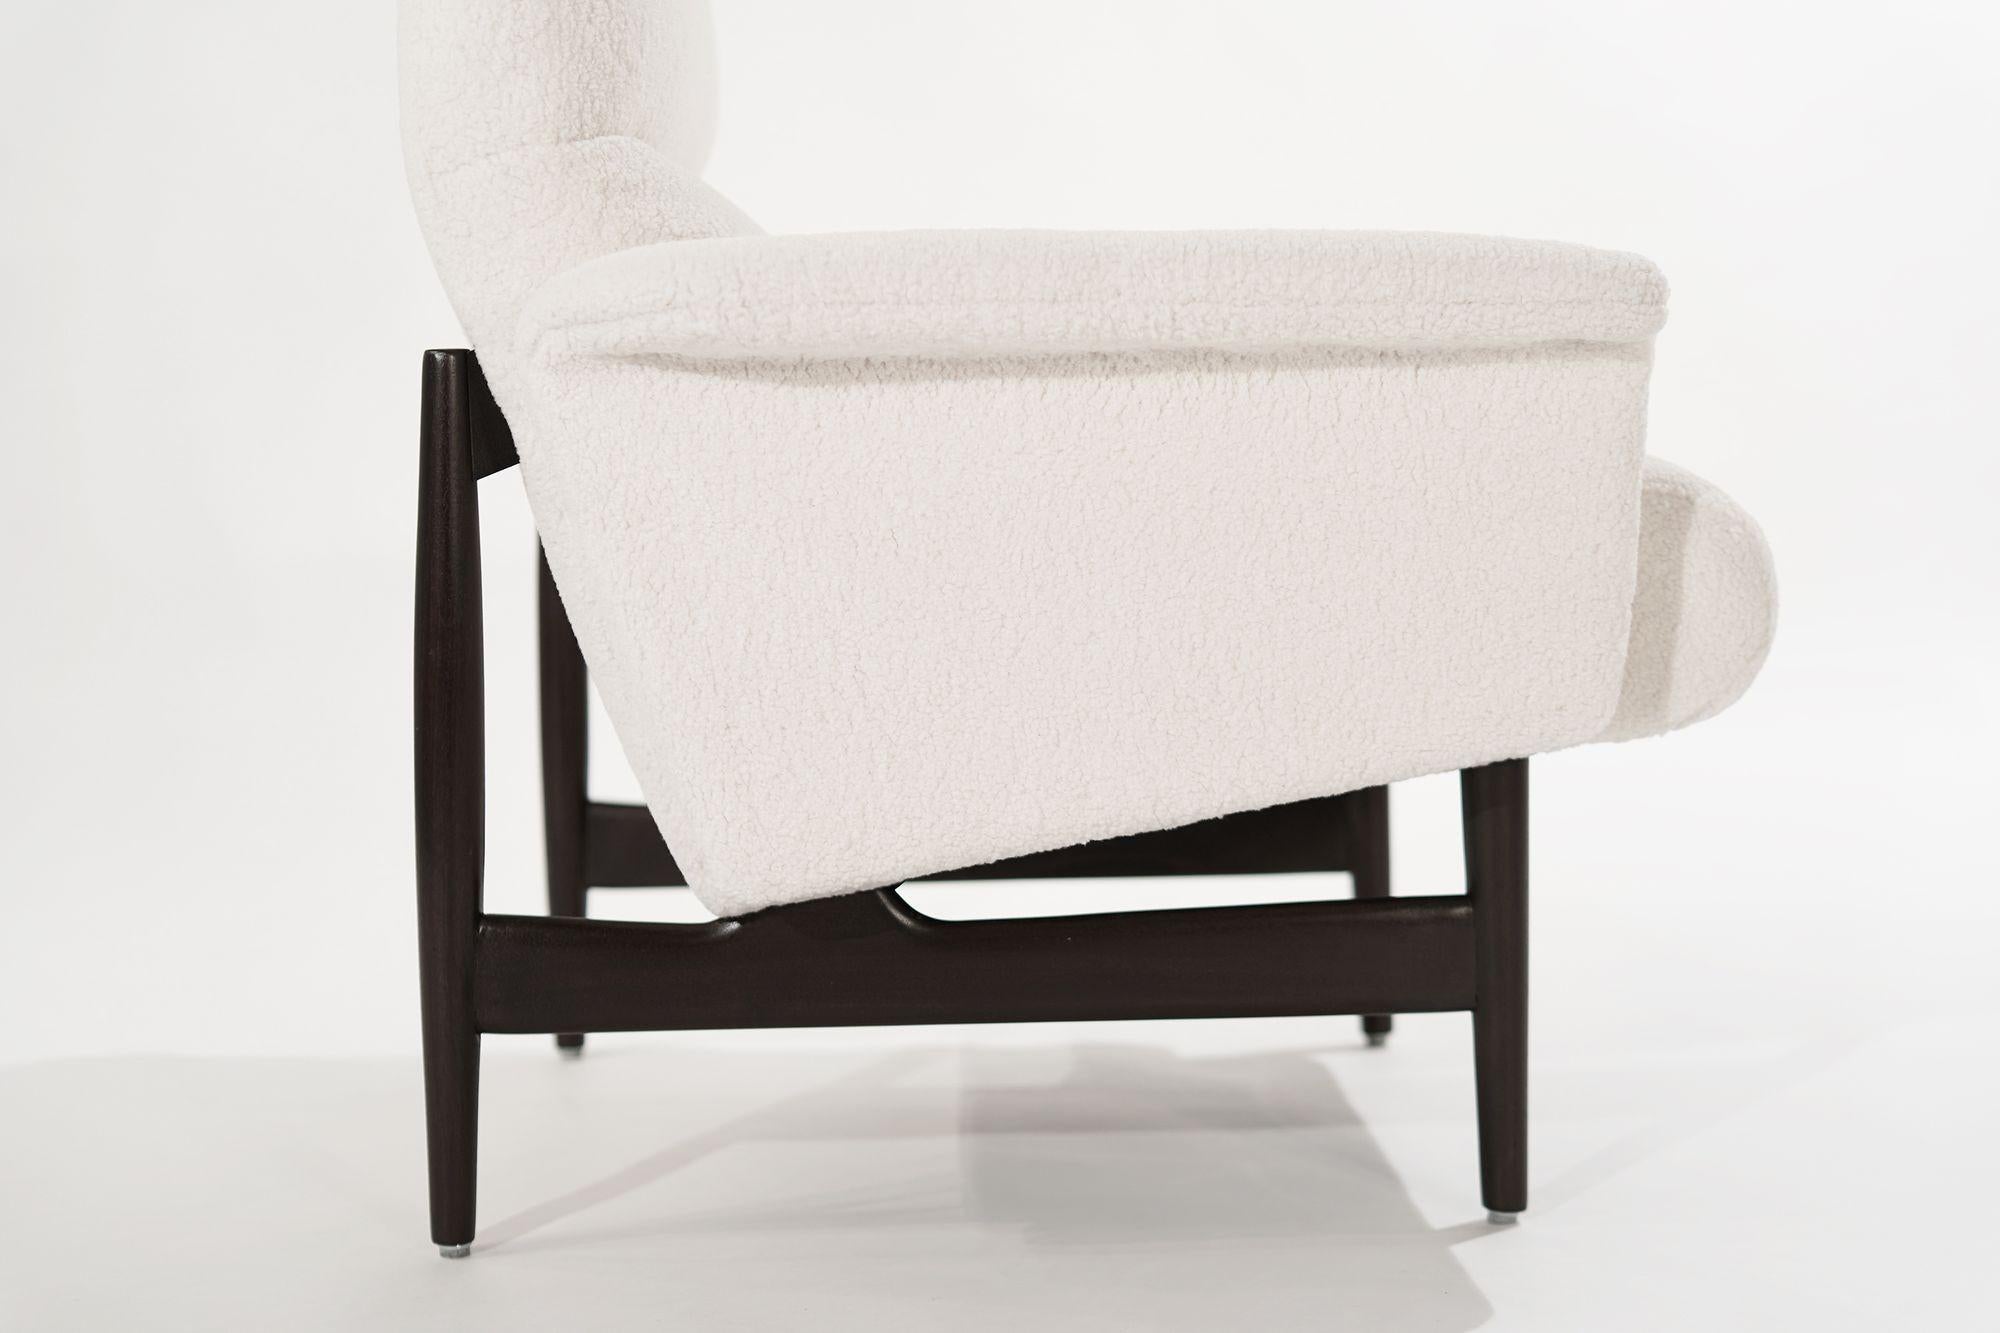 Scandinavian-Modern Lounge Chairs in Wool, 1950s For Sale 3